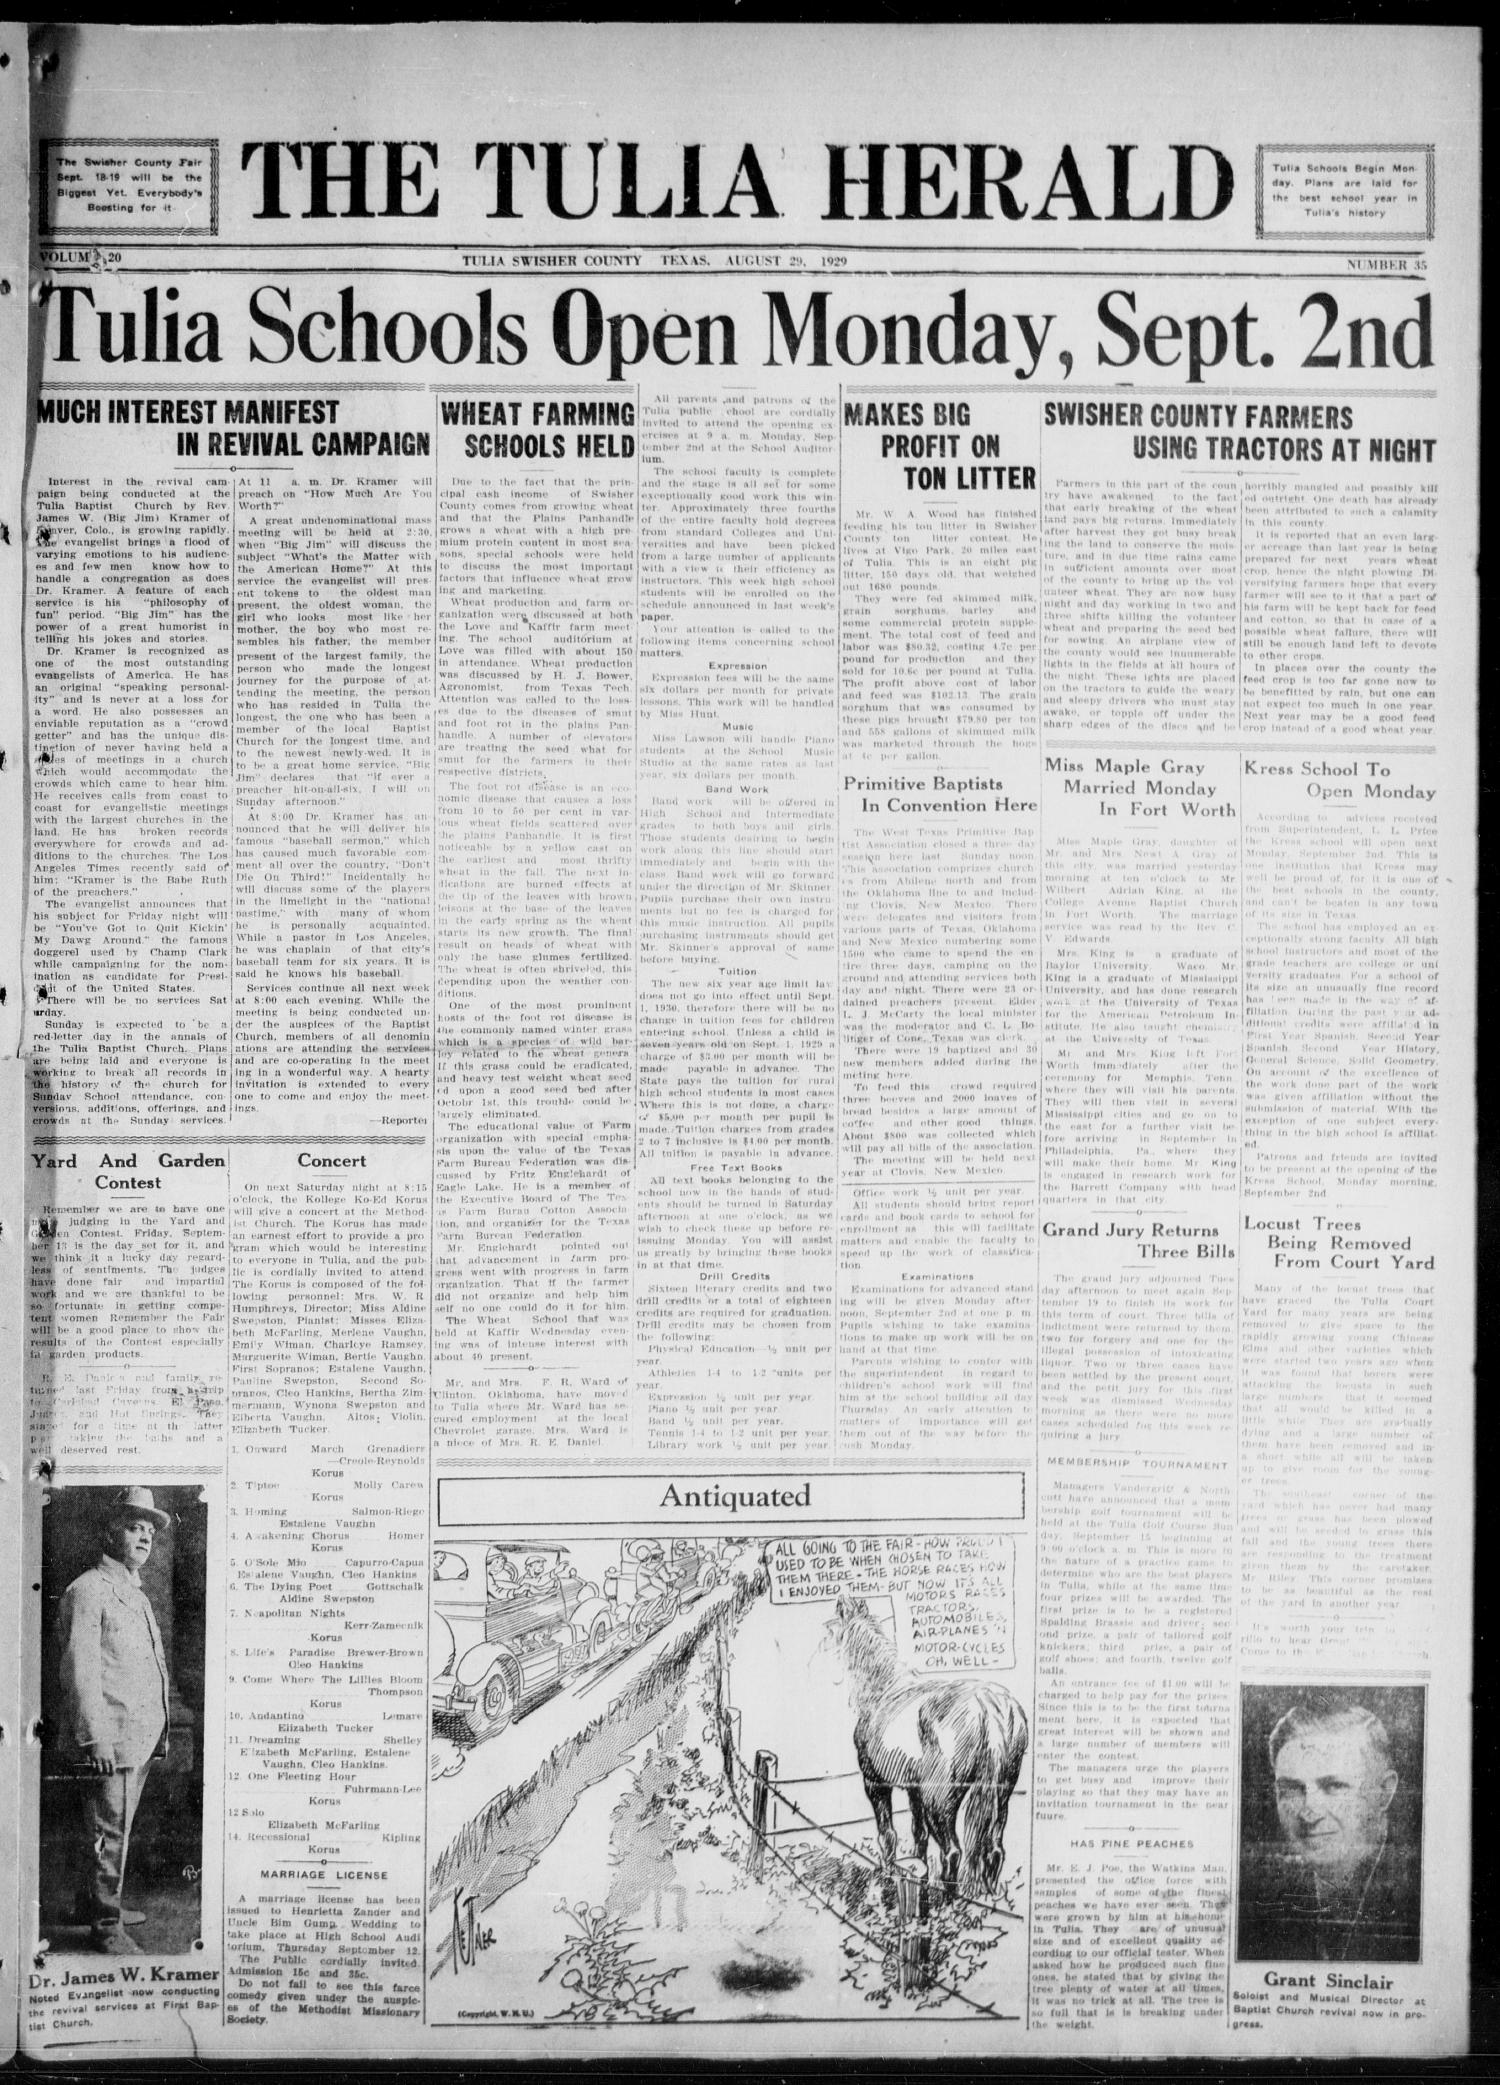 The Tulia Herald (Tulia, Tex), Vol. 20, No. 35, Ed. 1, Thursday, August 29, 1929
                                                
                                                    1
                                                